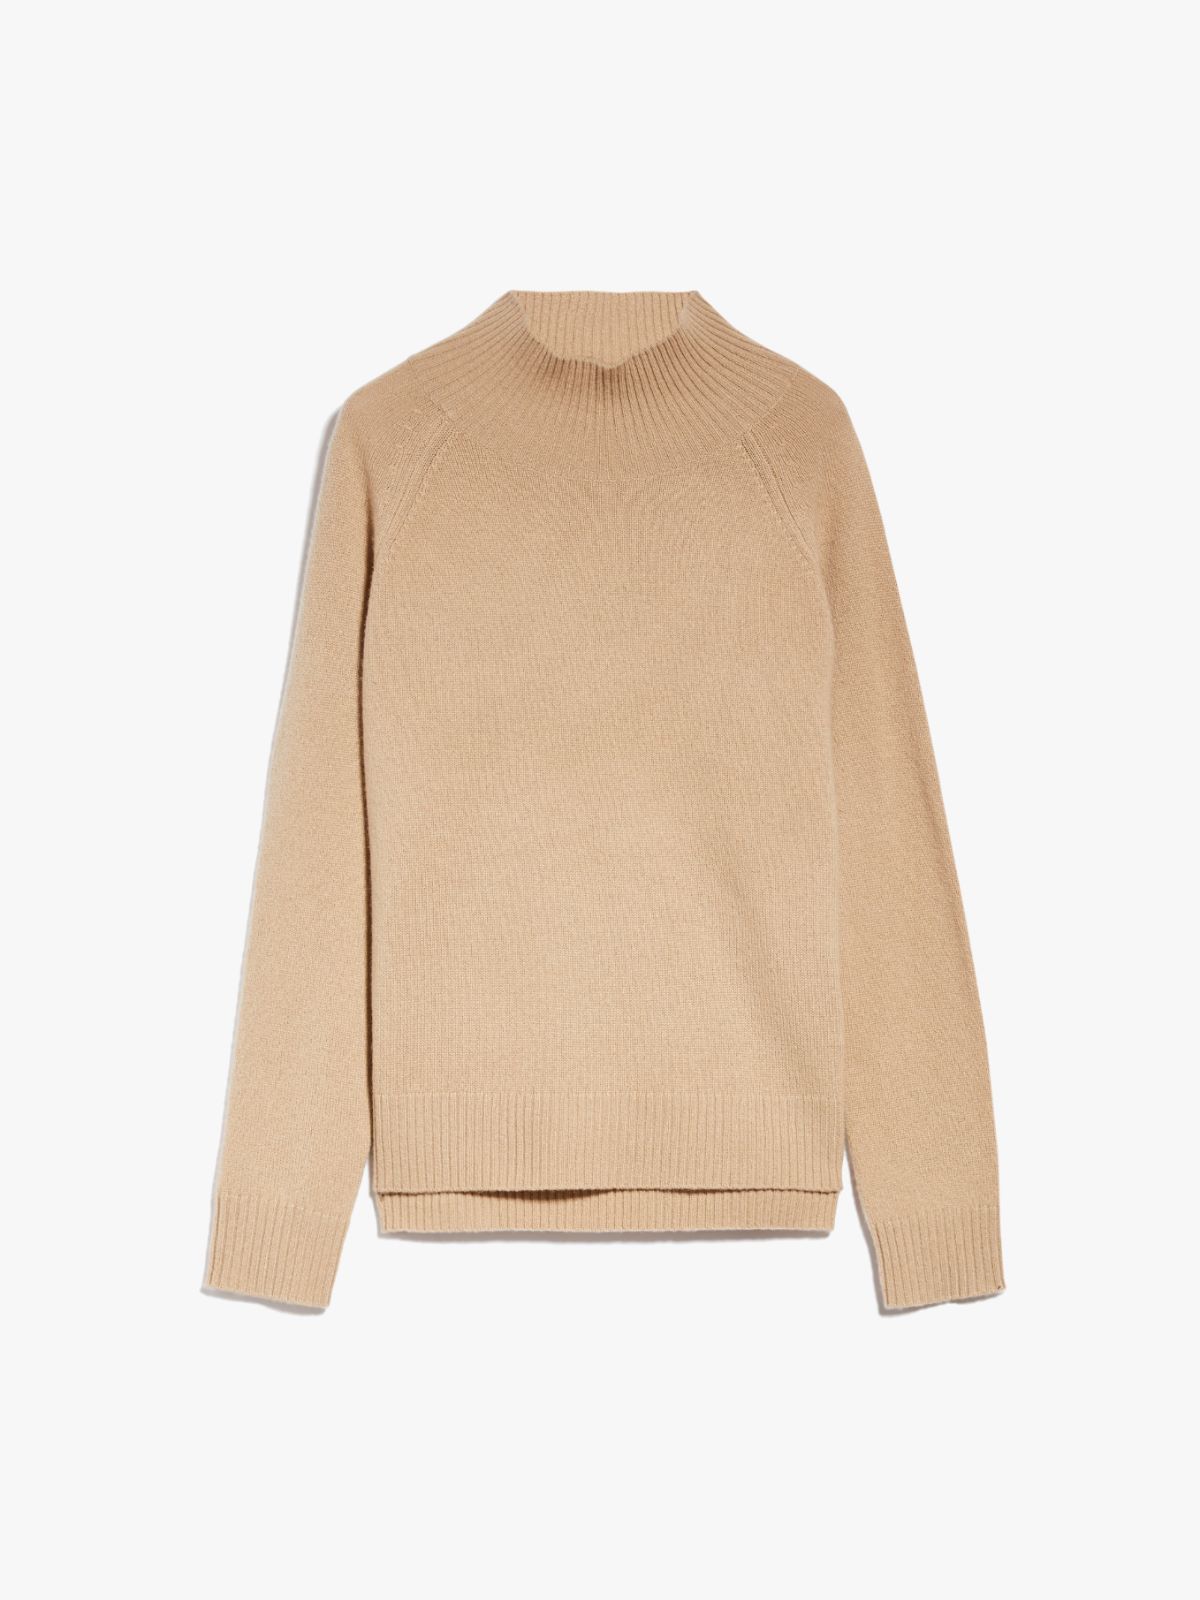 Cashmere sweater - BEIGE - Weekend Max Mara - 6